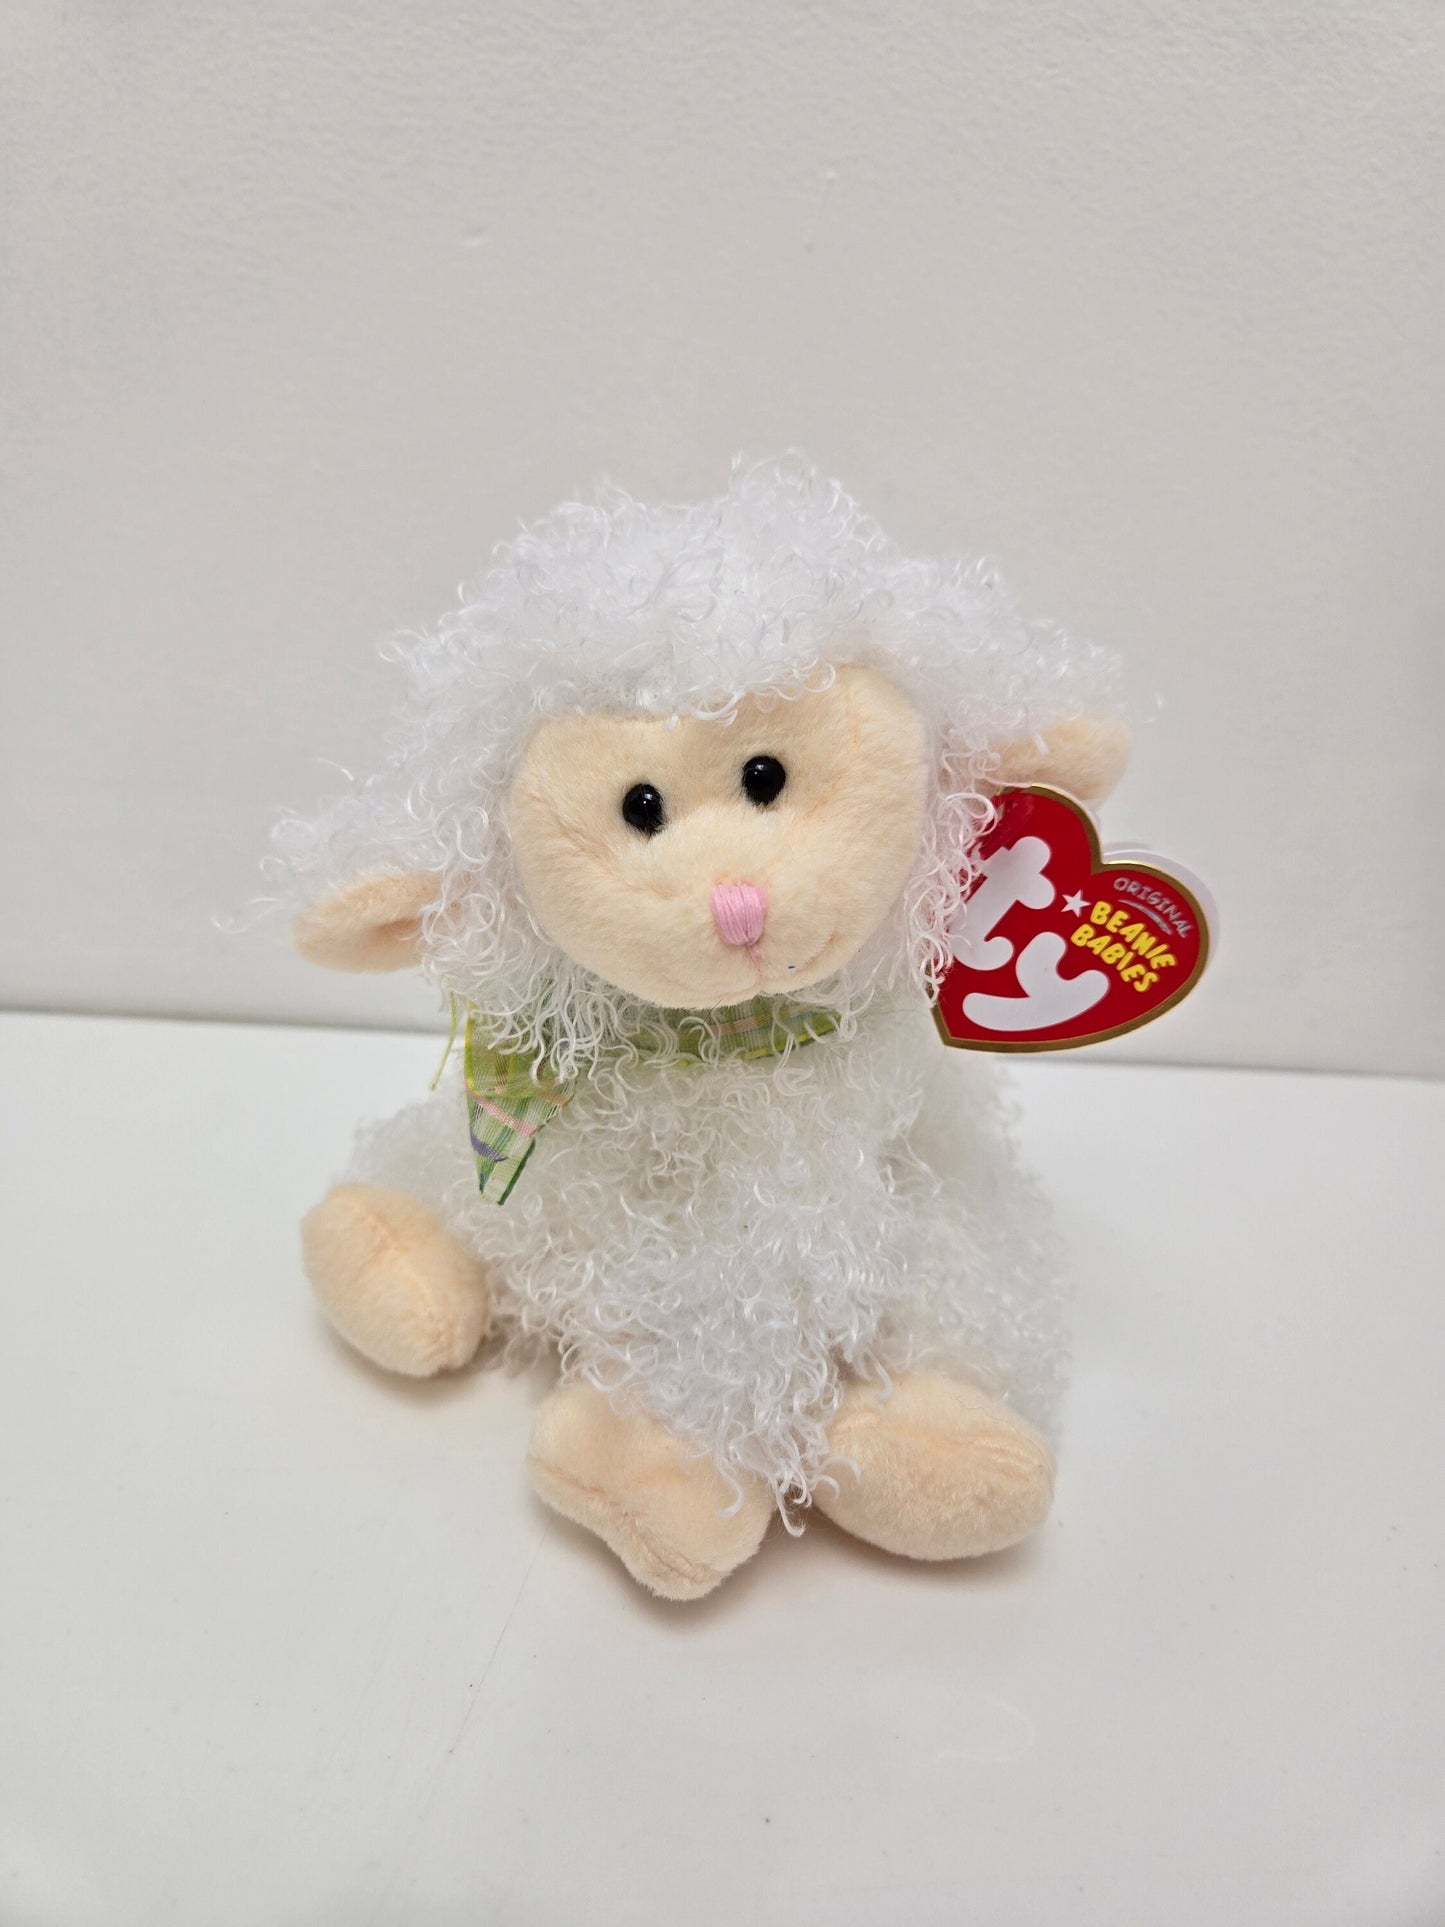 Ty Beanie Baby “Floxy” the Lamb! (6.5 inch)